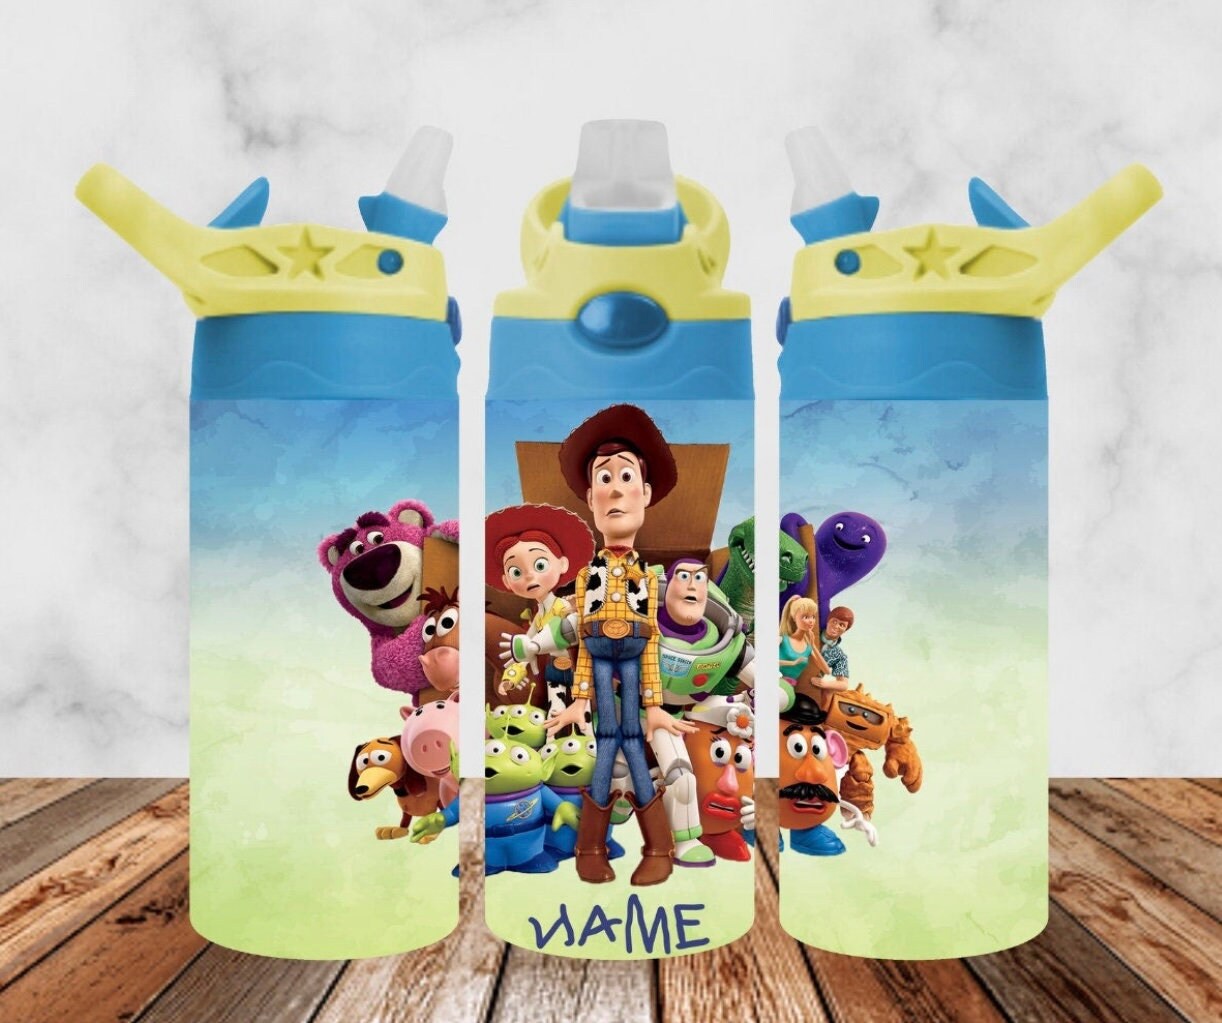 Woody Flip-Top Water Bottle - Toy Story 4